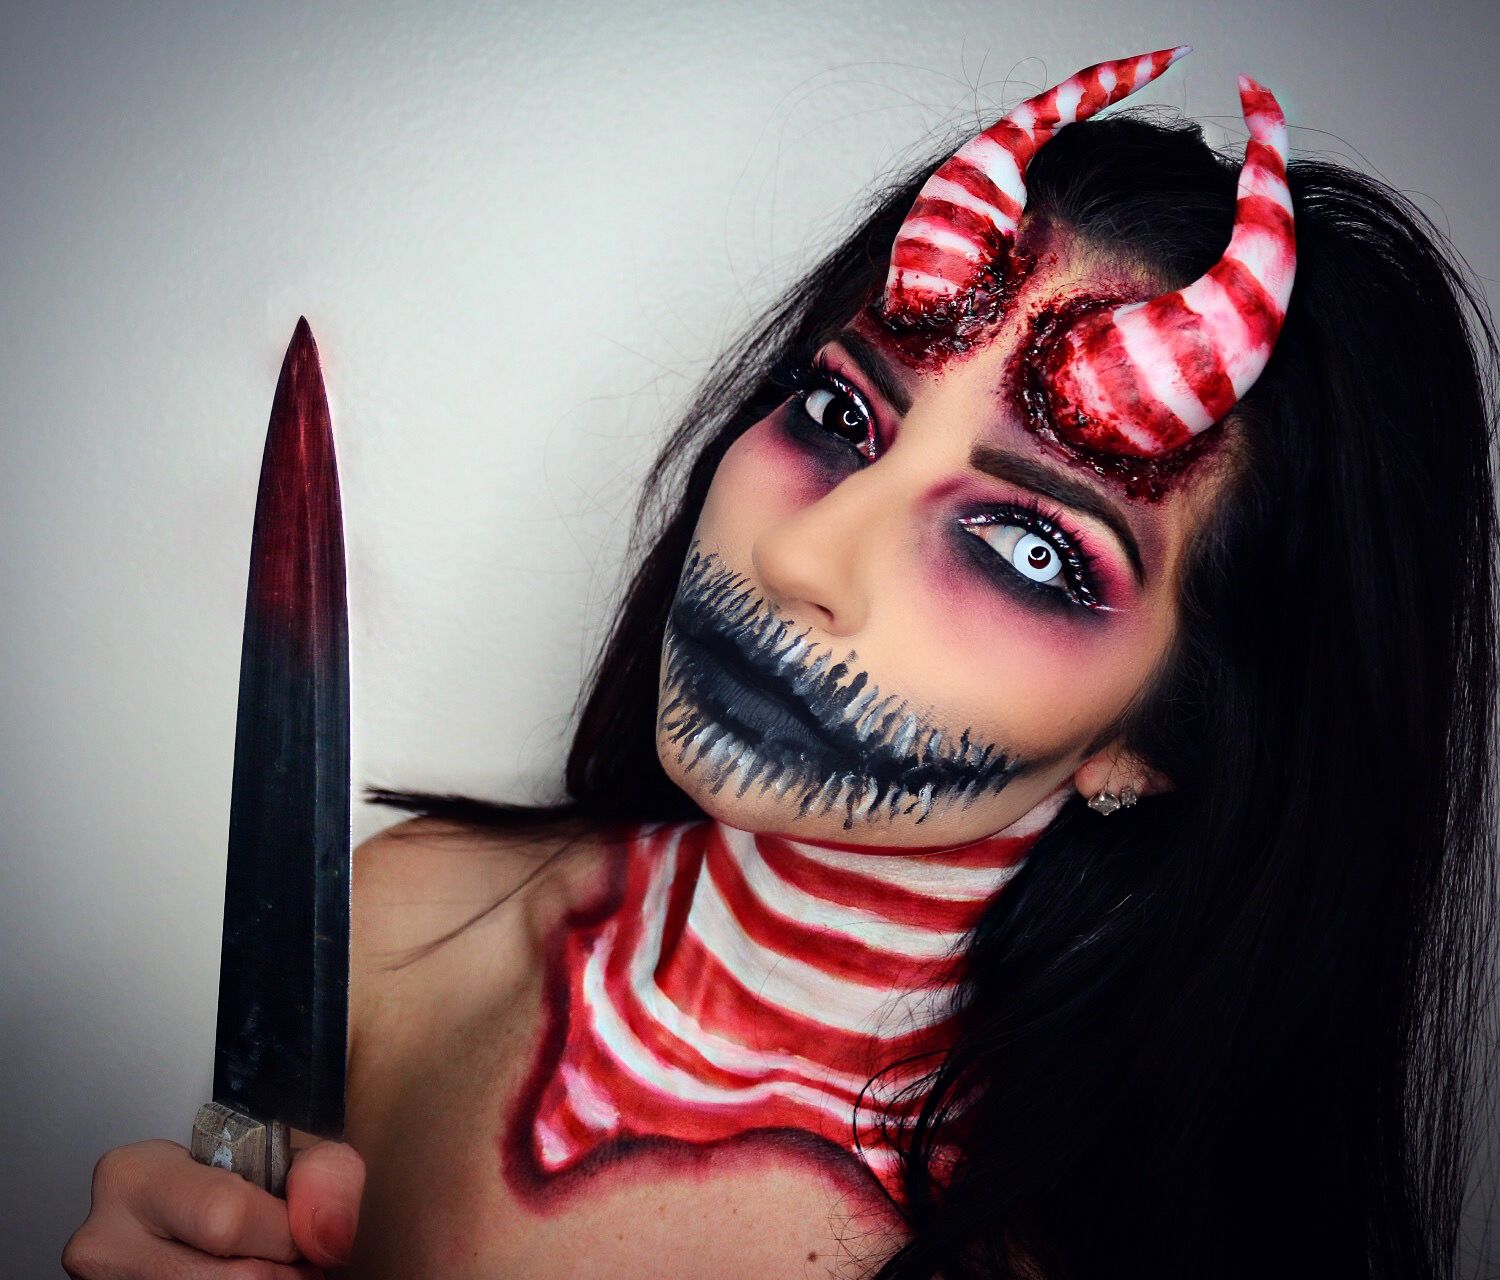 serial killer makeup ideas